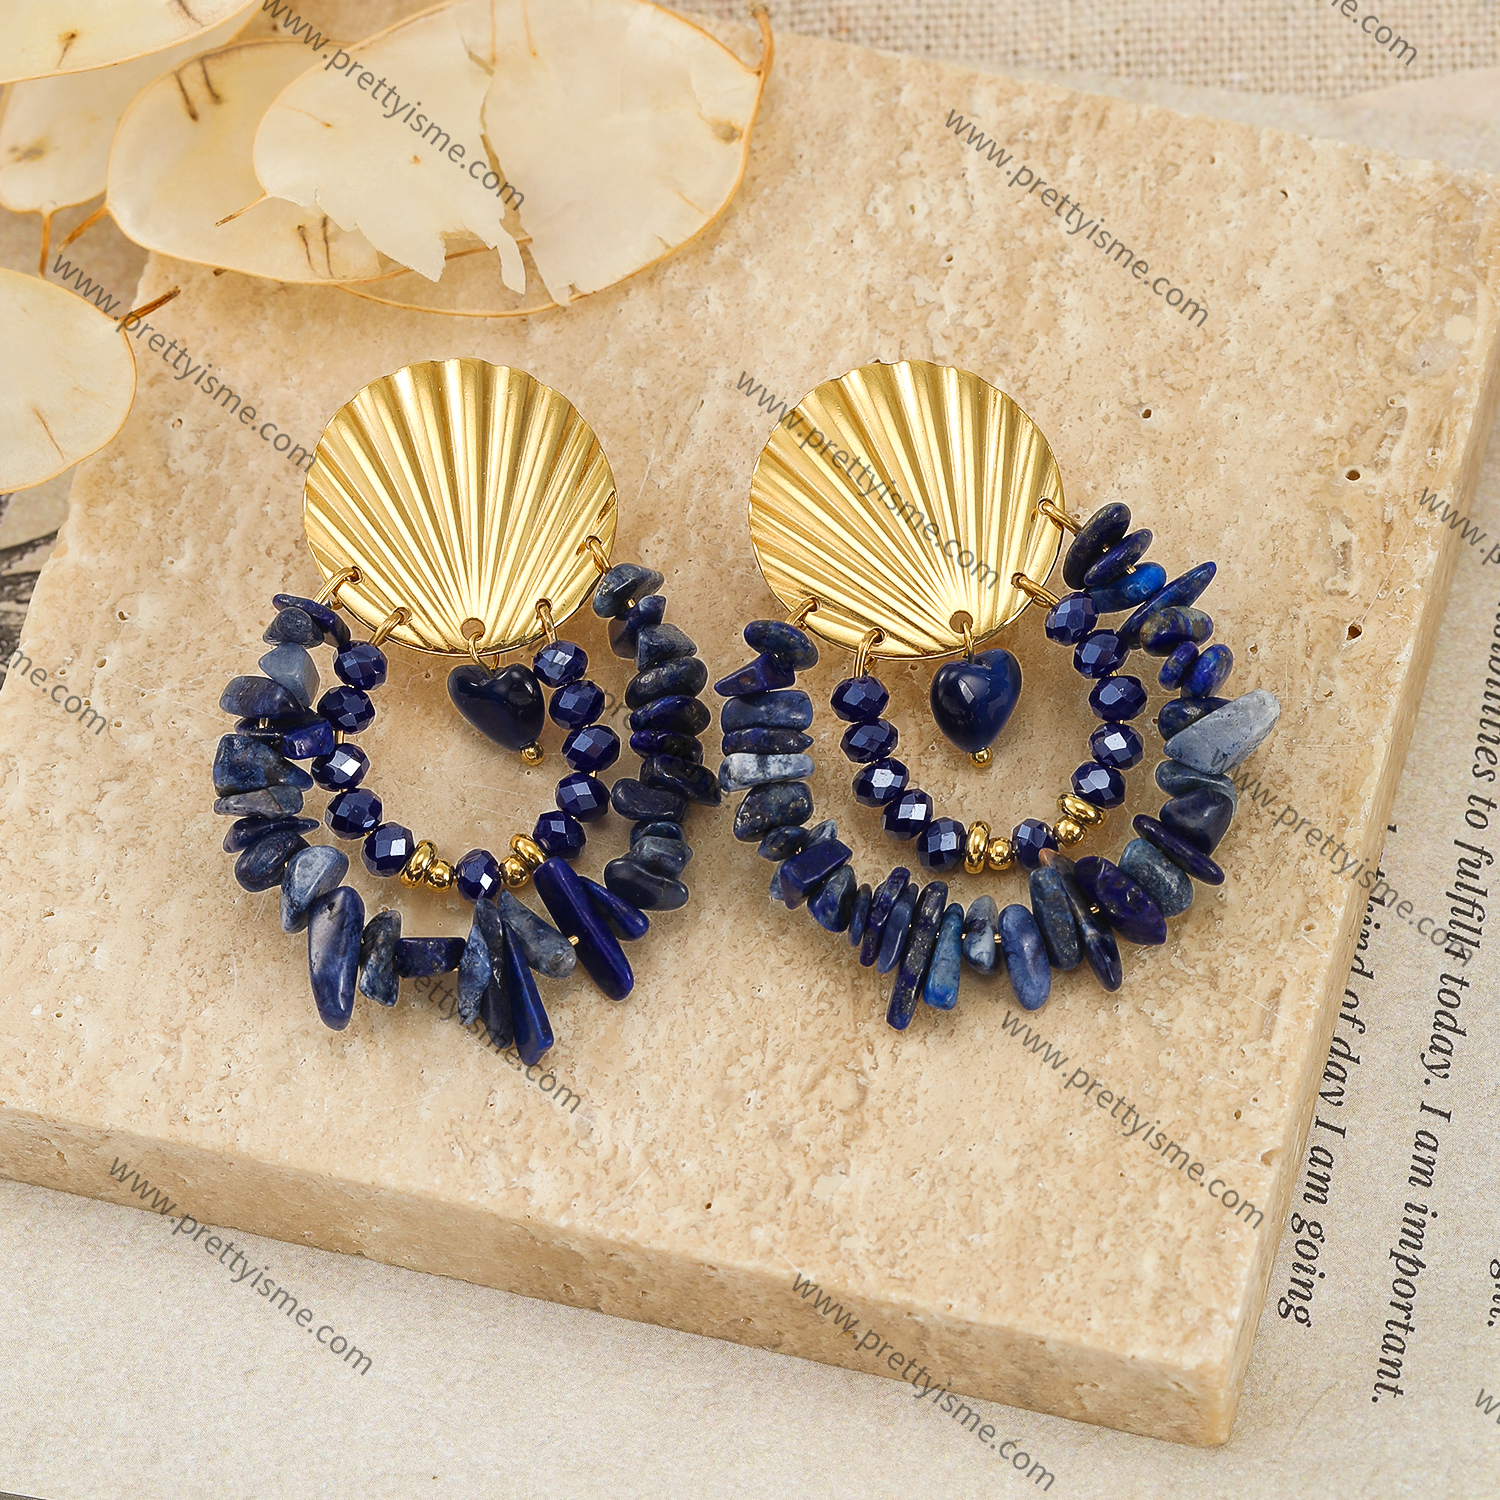 Designer Stainless Steel Earrings Gold Plated 18K with Lapis Lazuli Earrings.webp